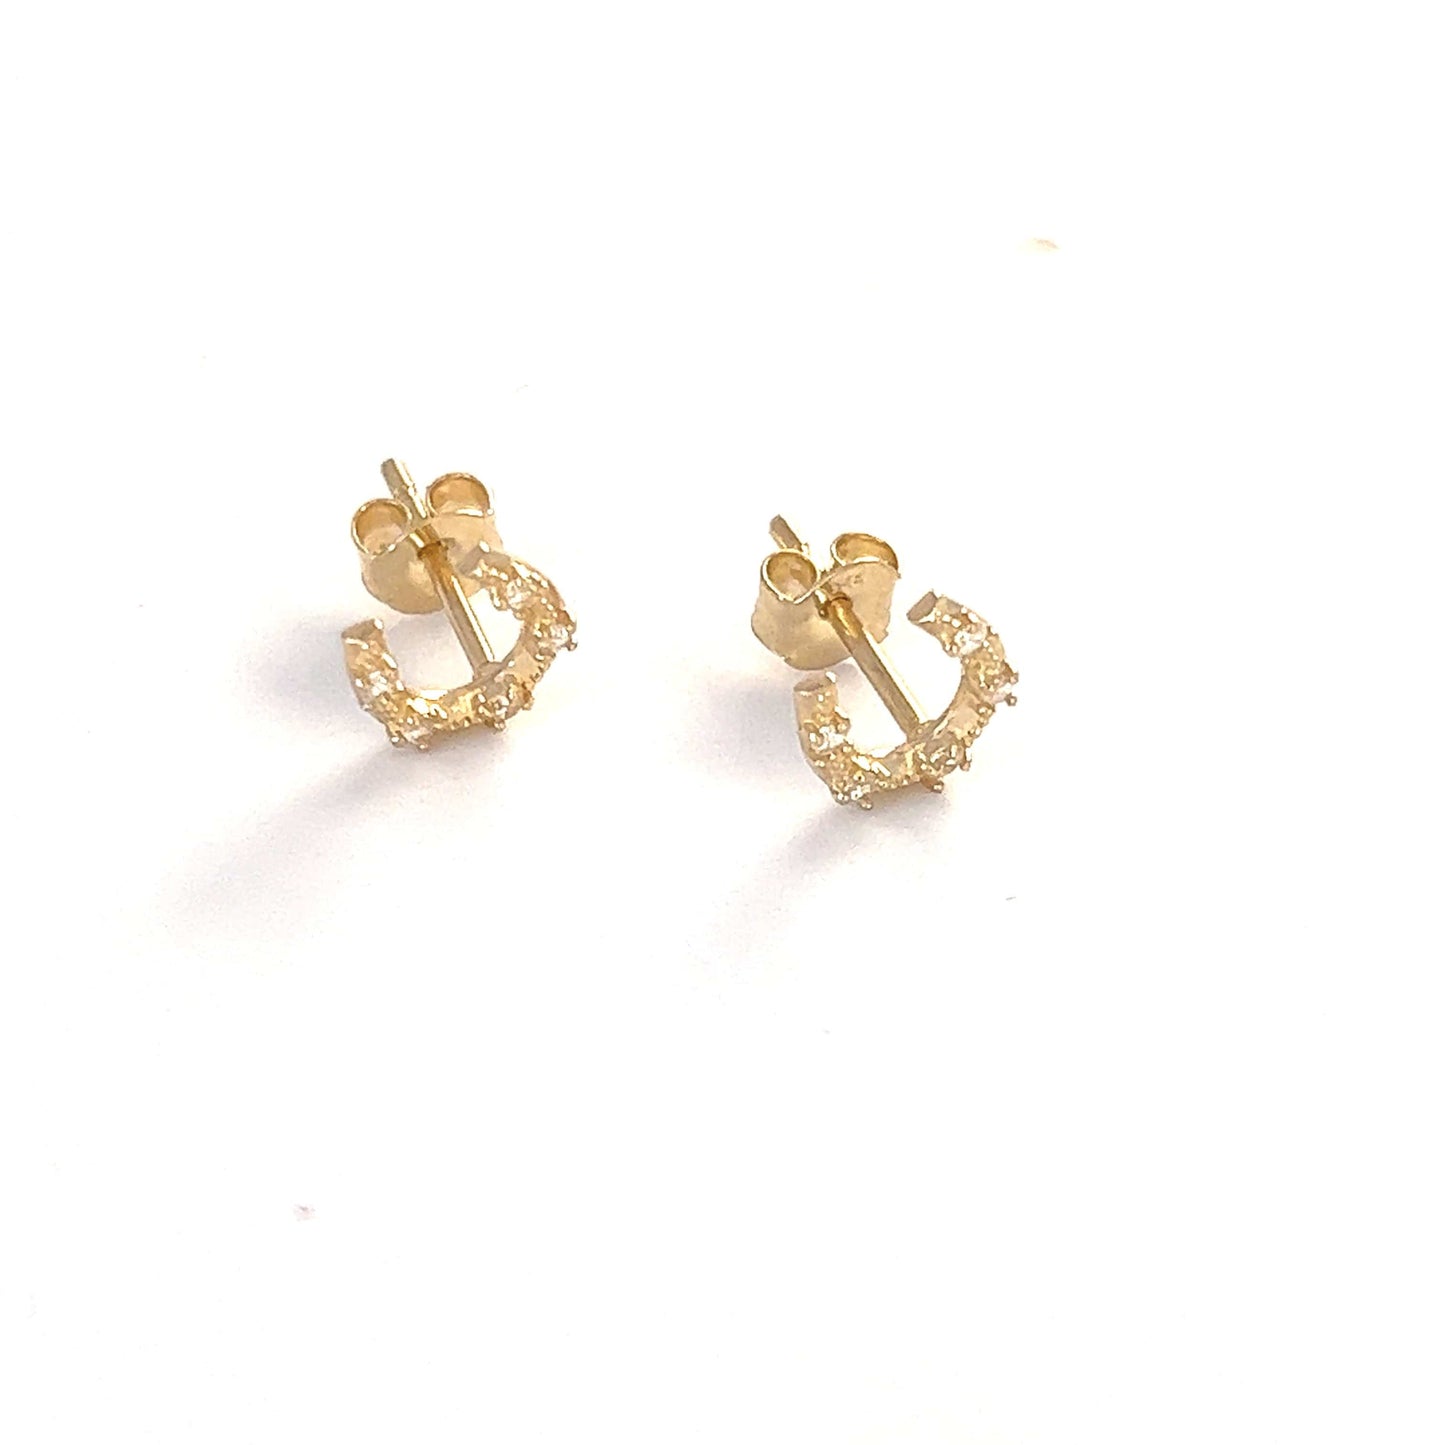 PEGASUS JEWELLERY Earrings 9ct Gold Horseshoe Earrings Sparkle